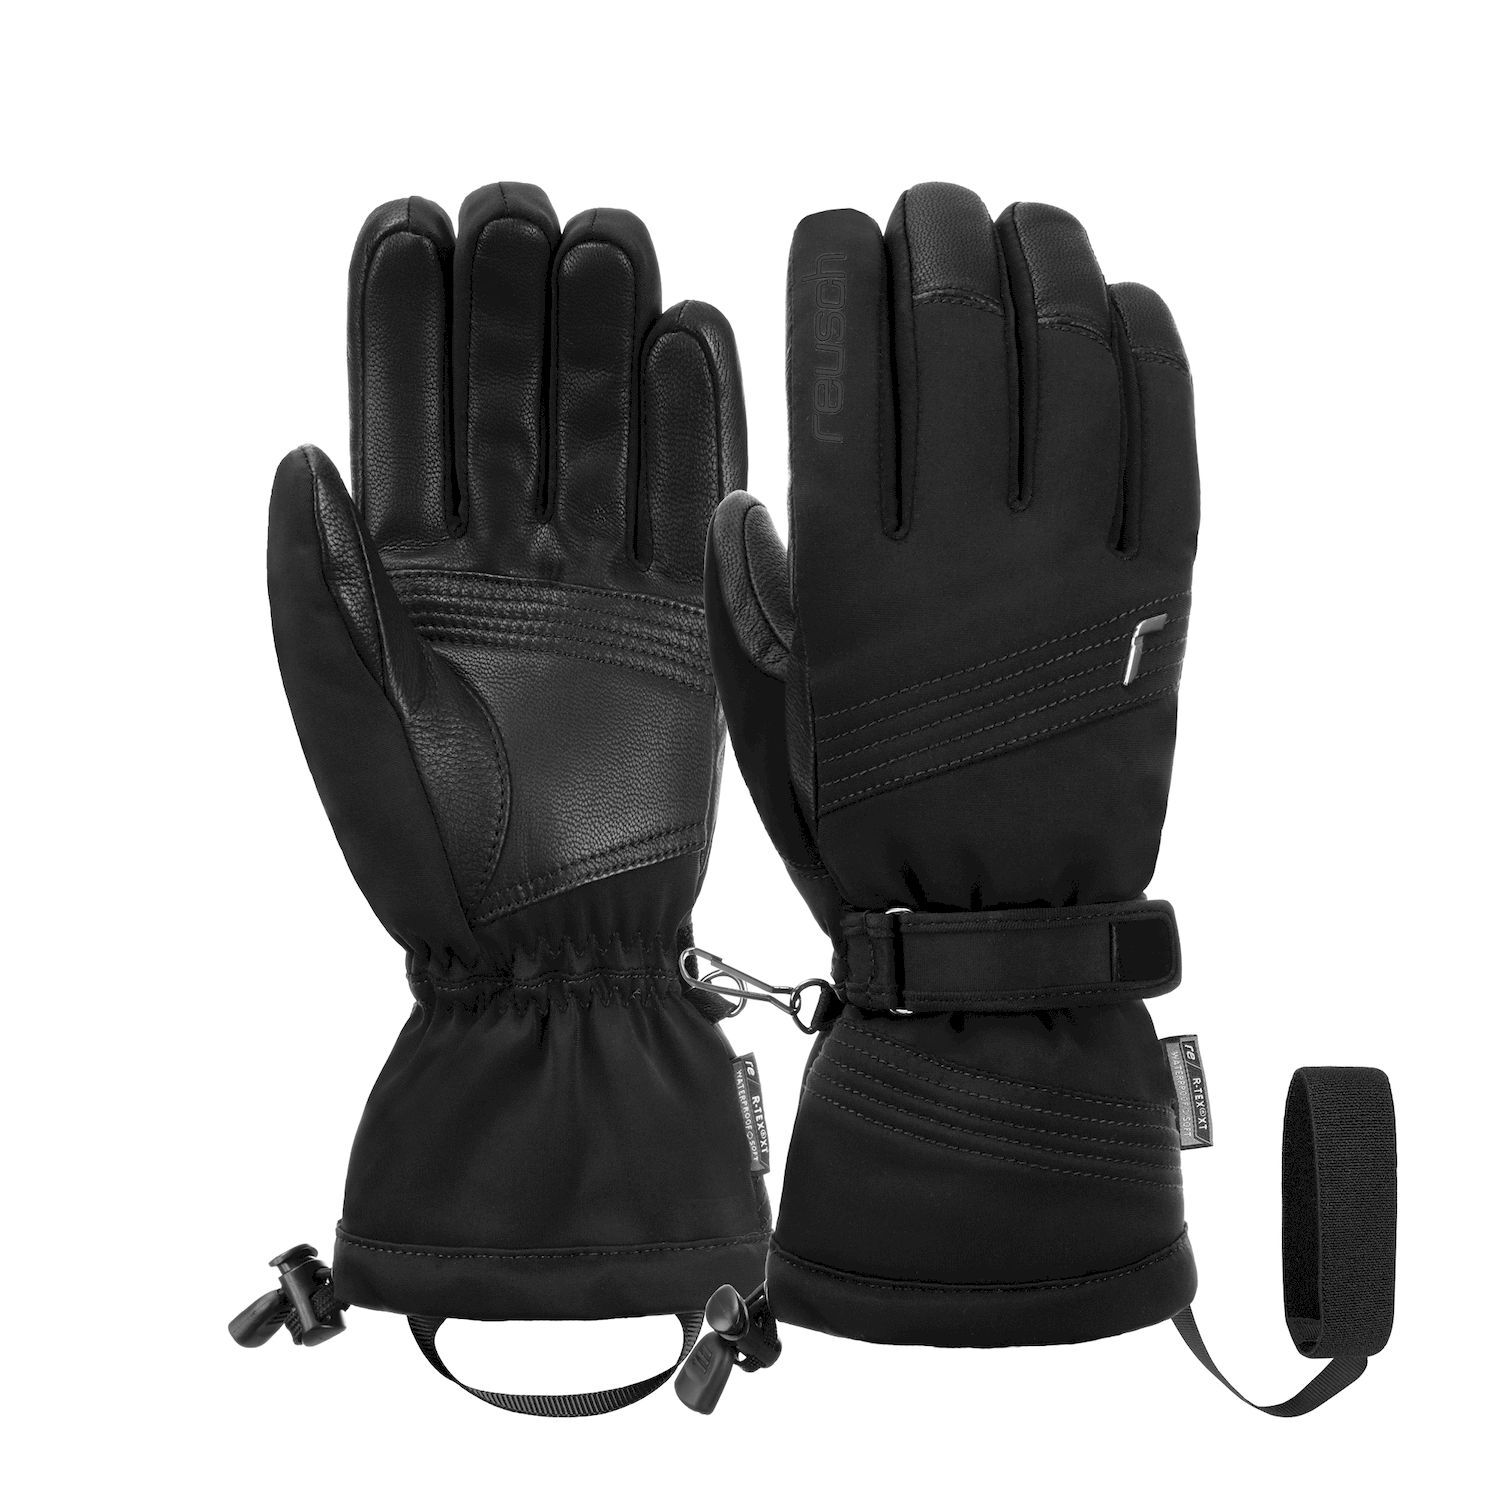 Reusch Charlotte R-TEX XT - Ski gloves - Women's